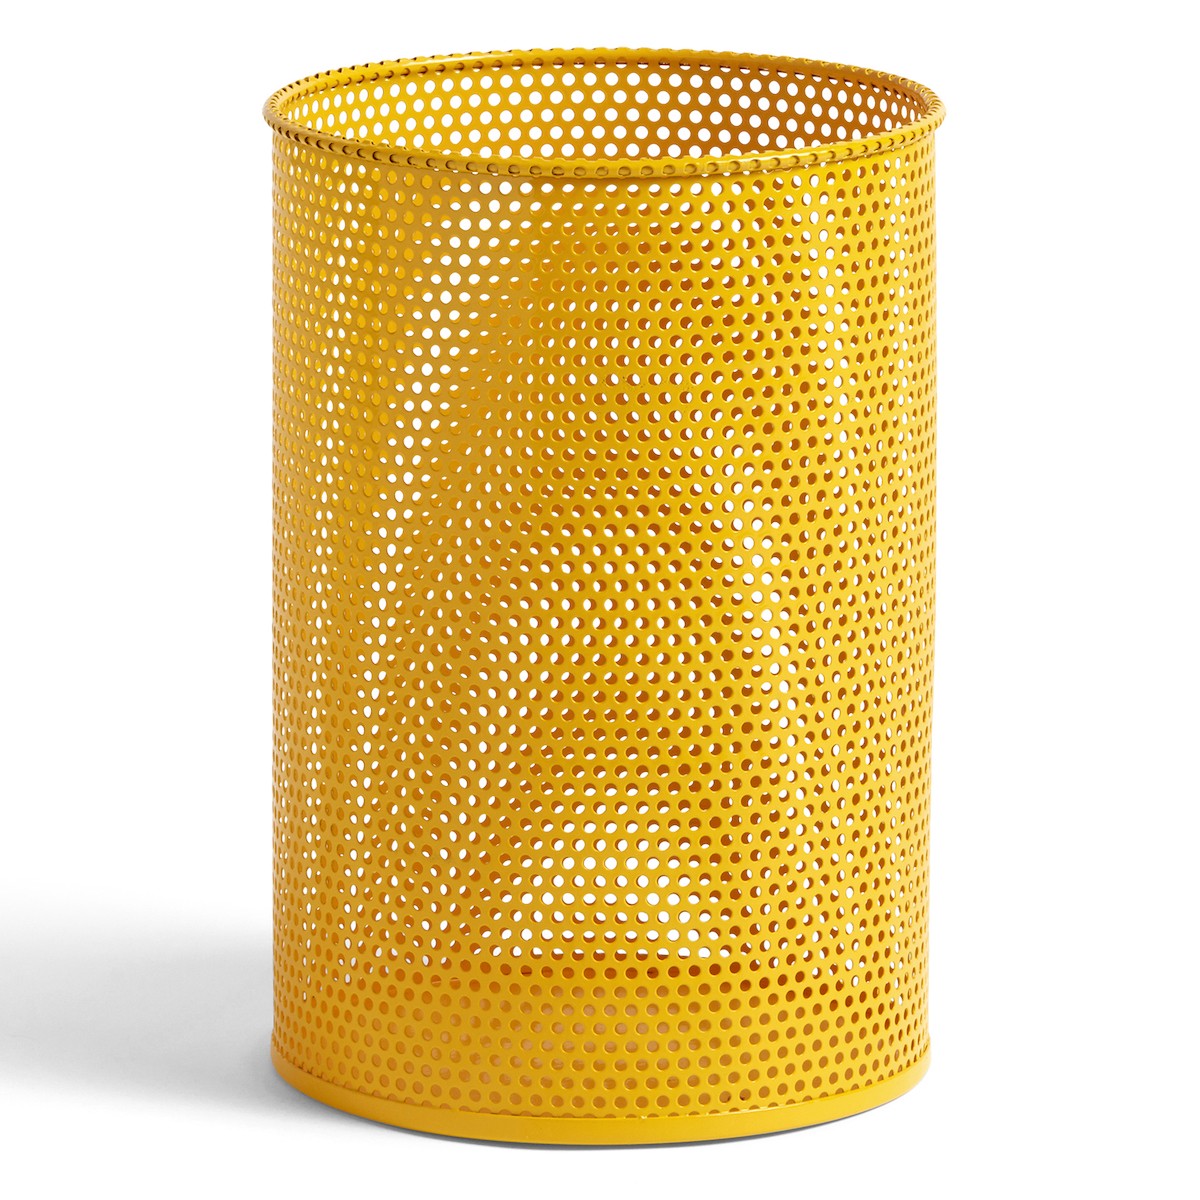 EPUISE - H37 x Ø25 cm - jaune - Perforated Bin M